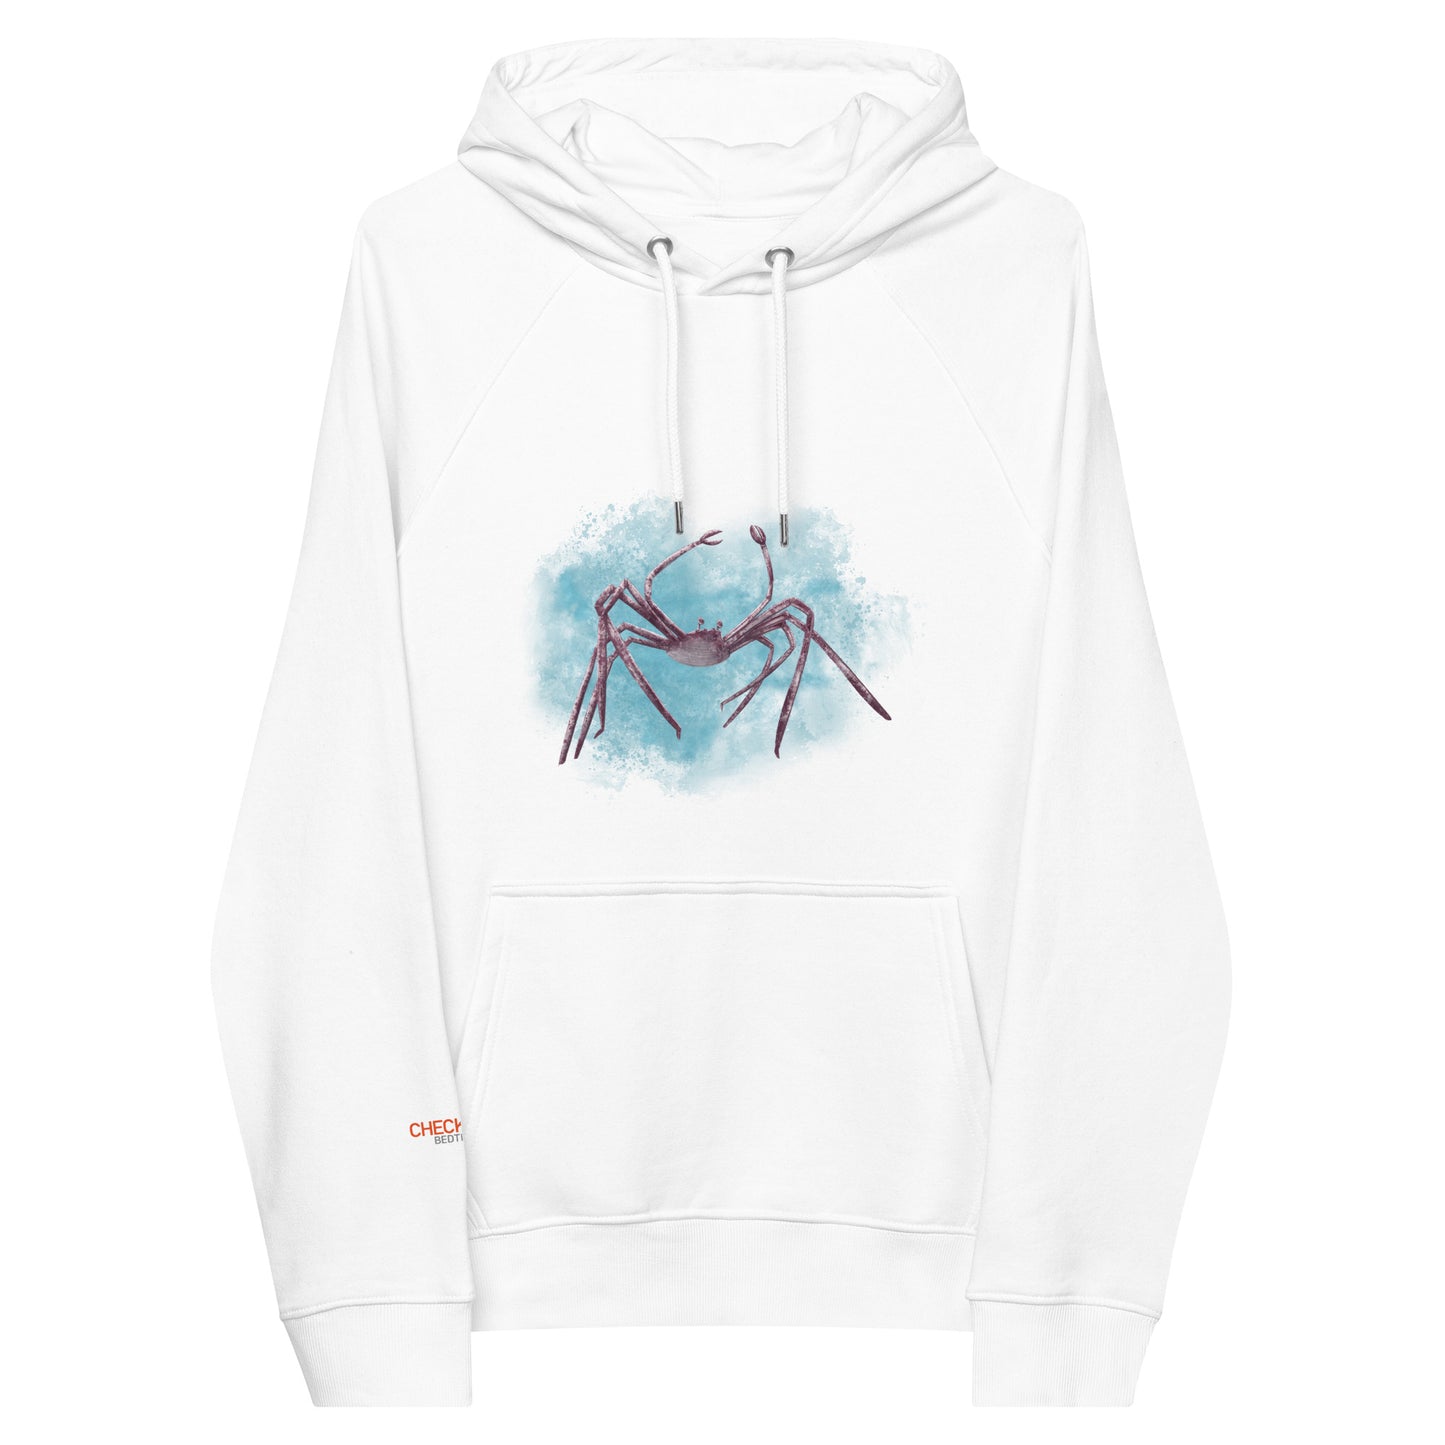 The Spider Crab - Unisex eco raglan hoodie